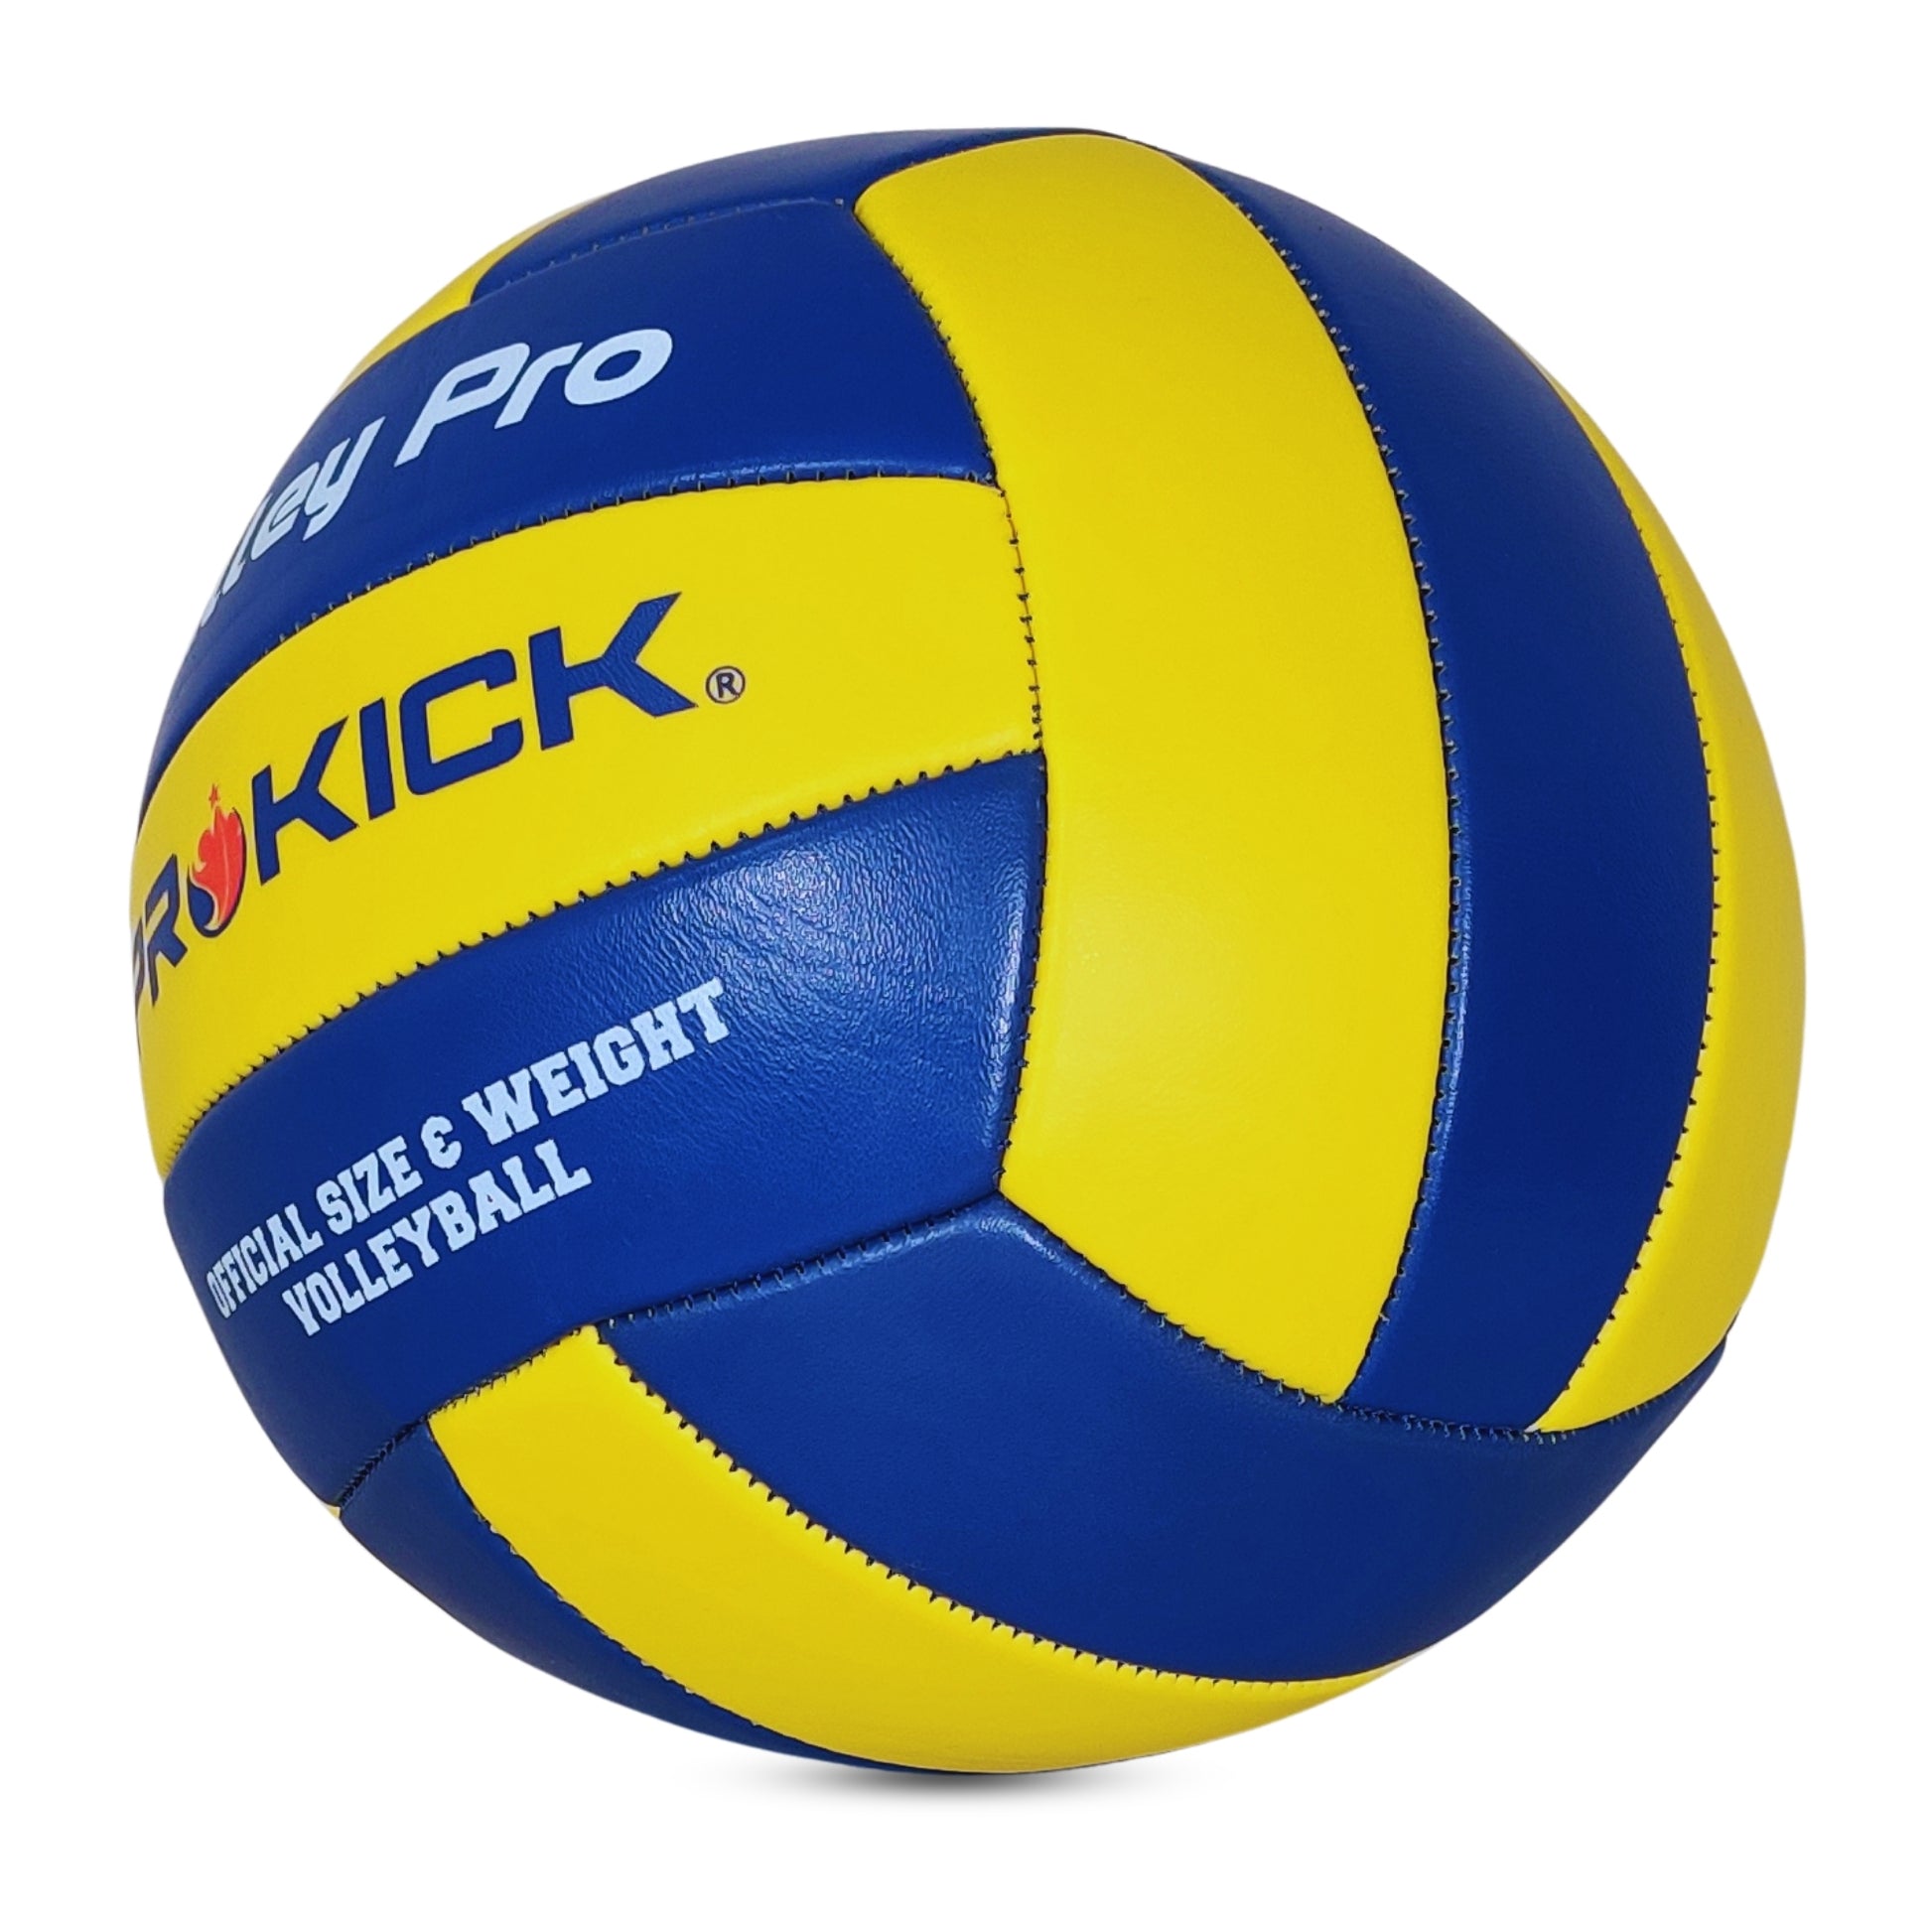 Prokick Volley Pro Machine Stitched 18-P Volleyball, Blue/Yellow (Size 4) - Best Price online Prokicksports.com